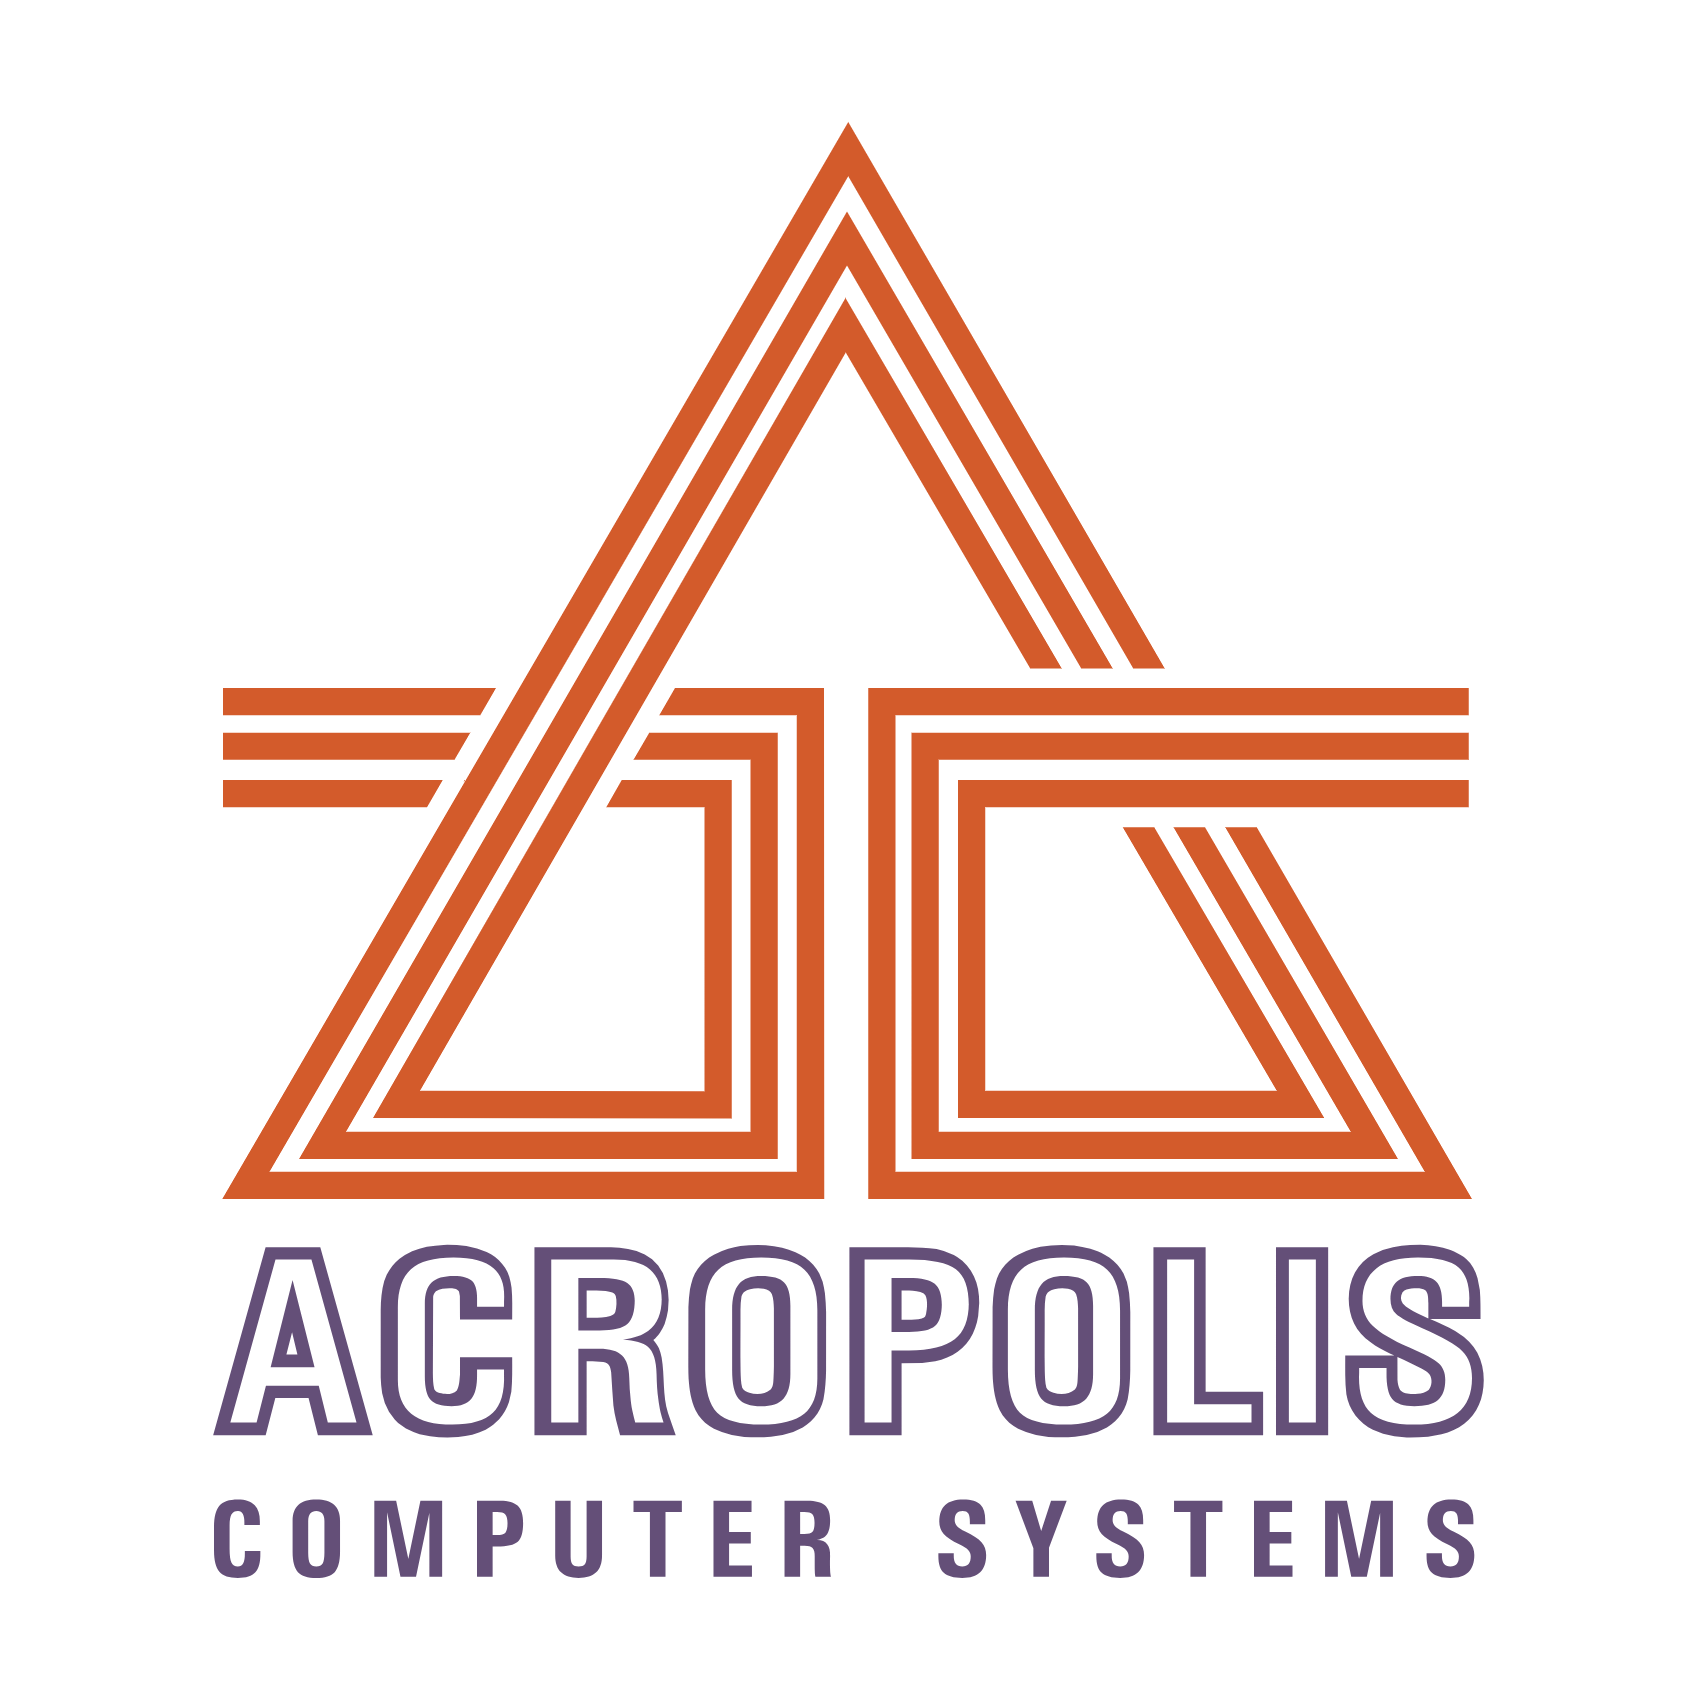 Acropolis Logo PNG Transparent & SVG Vector - Freebie Supply